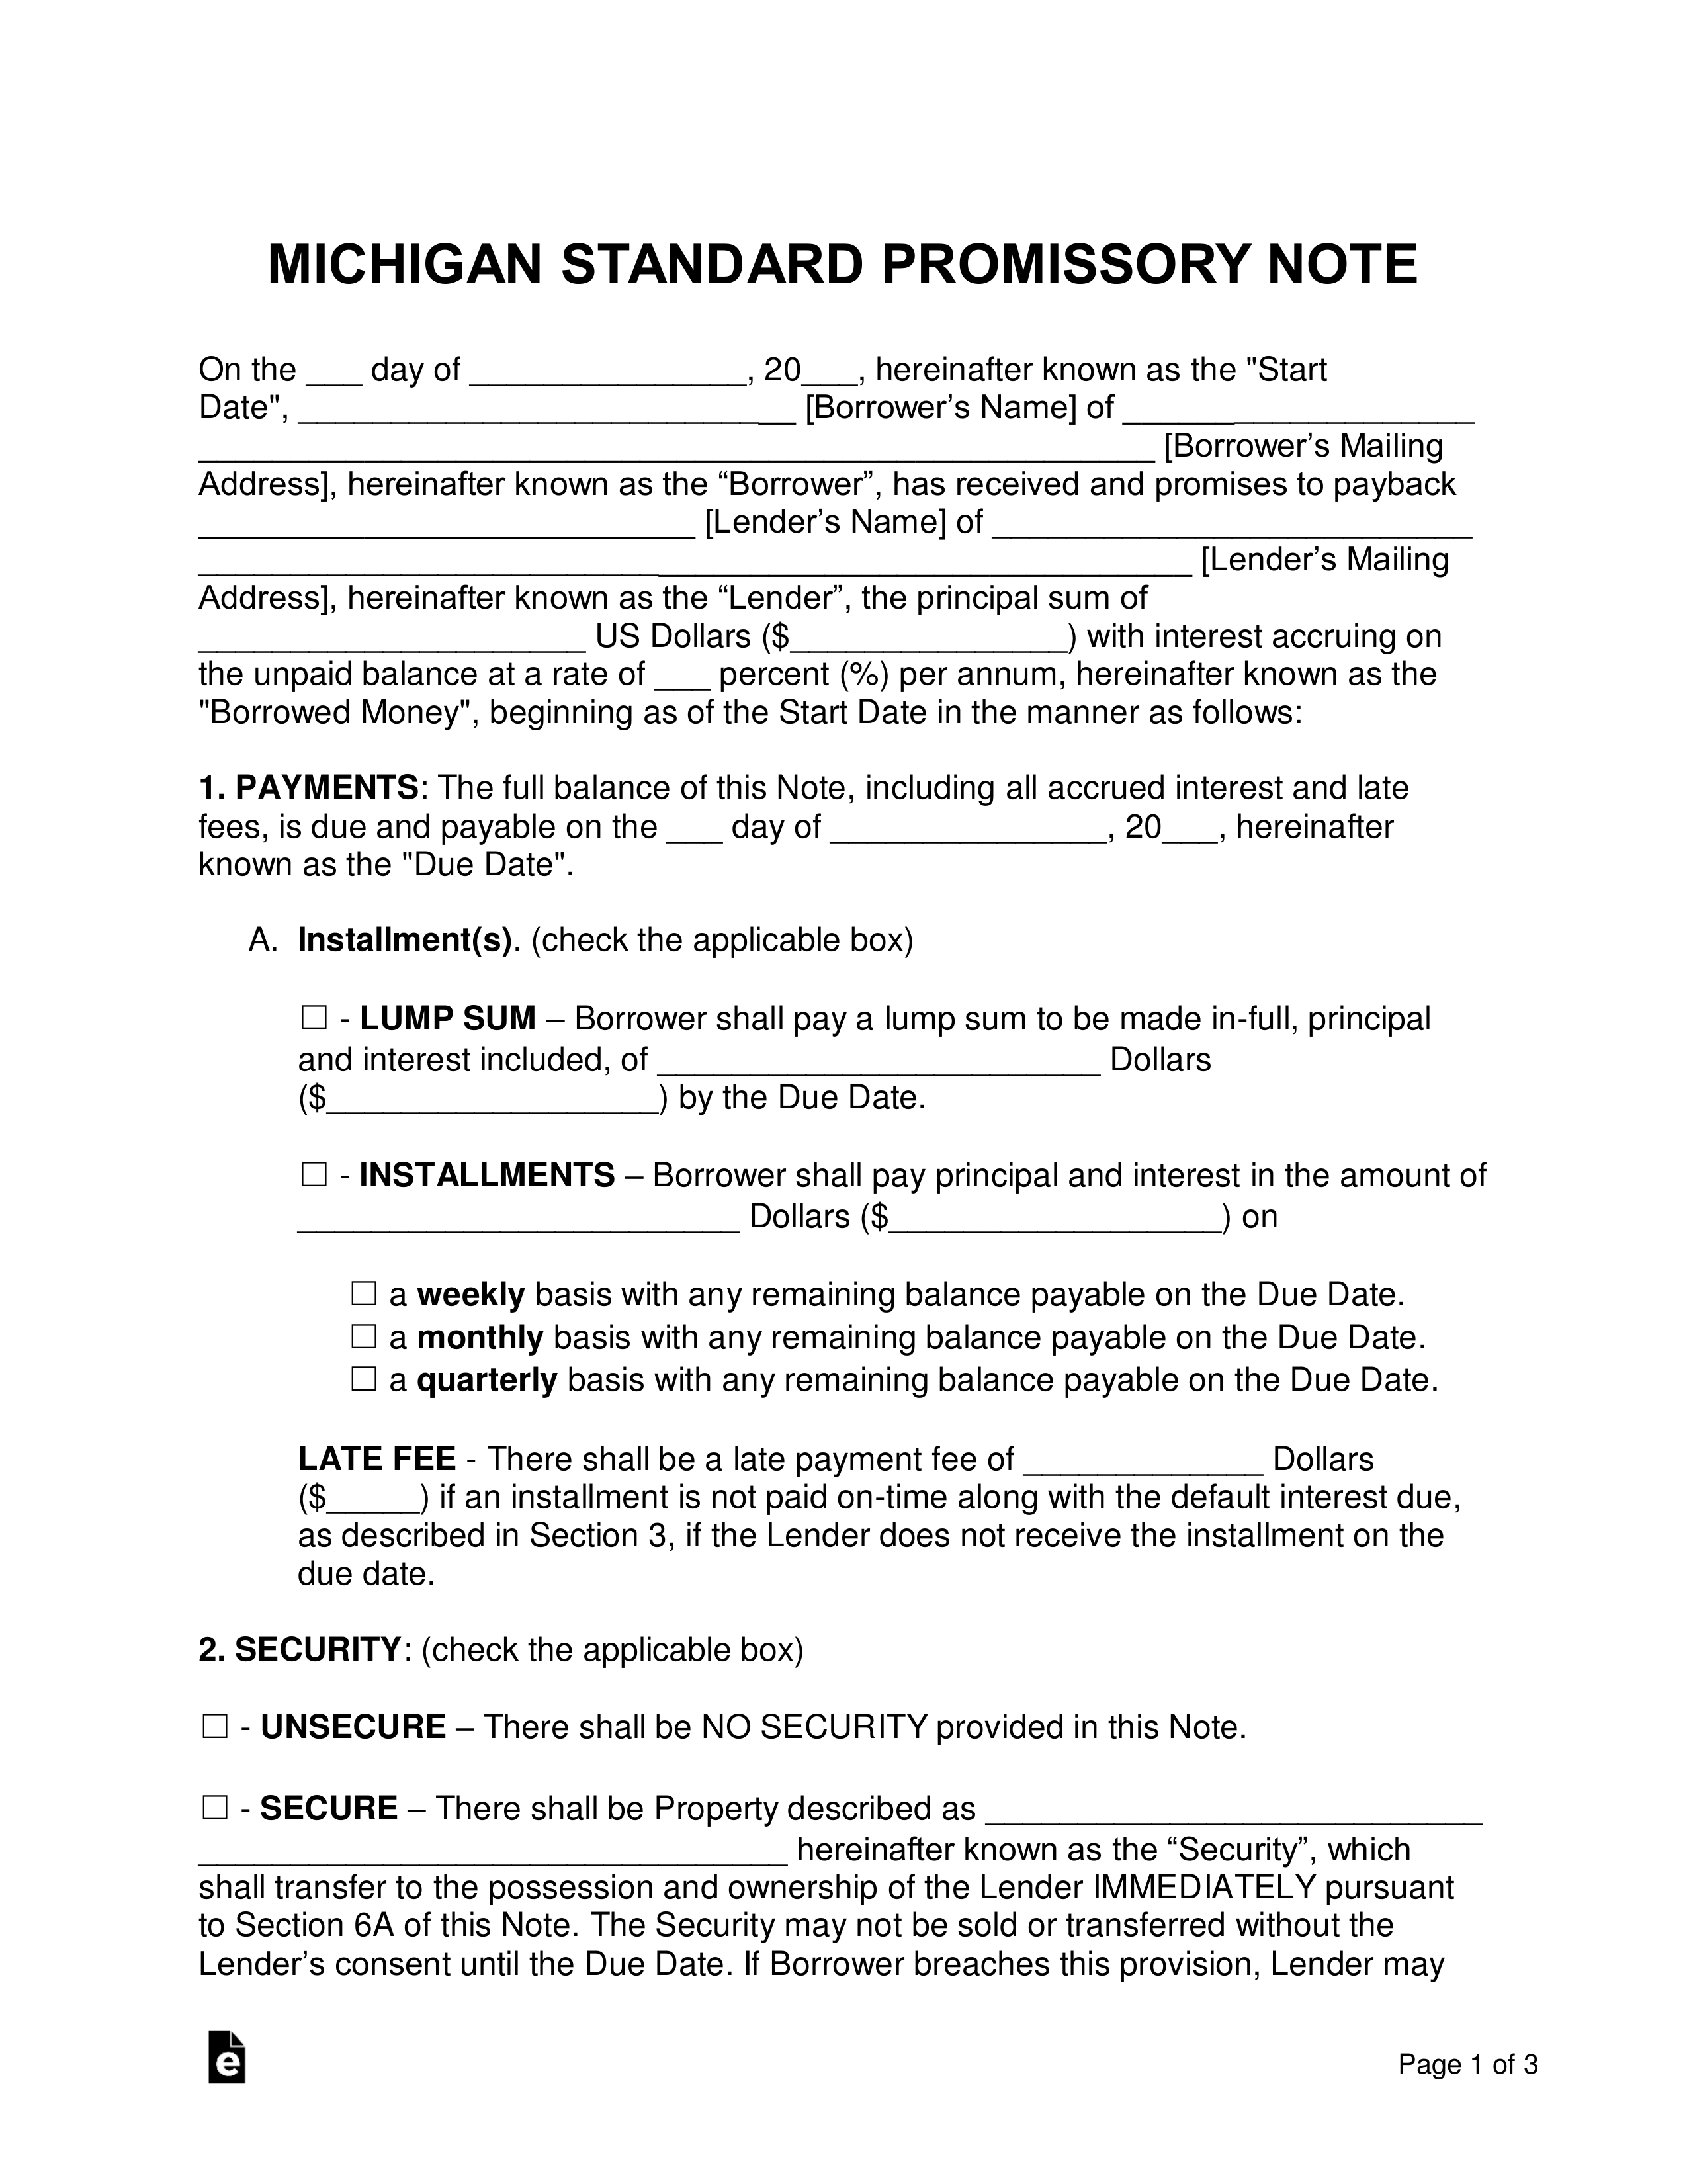 Michigan Promissory Note Templates (2)